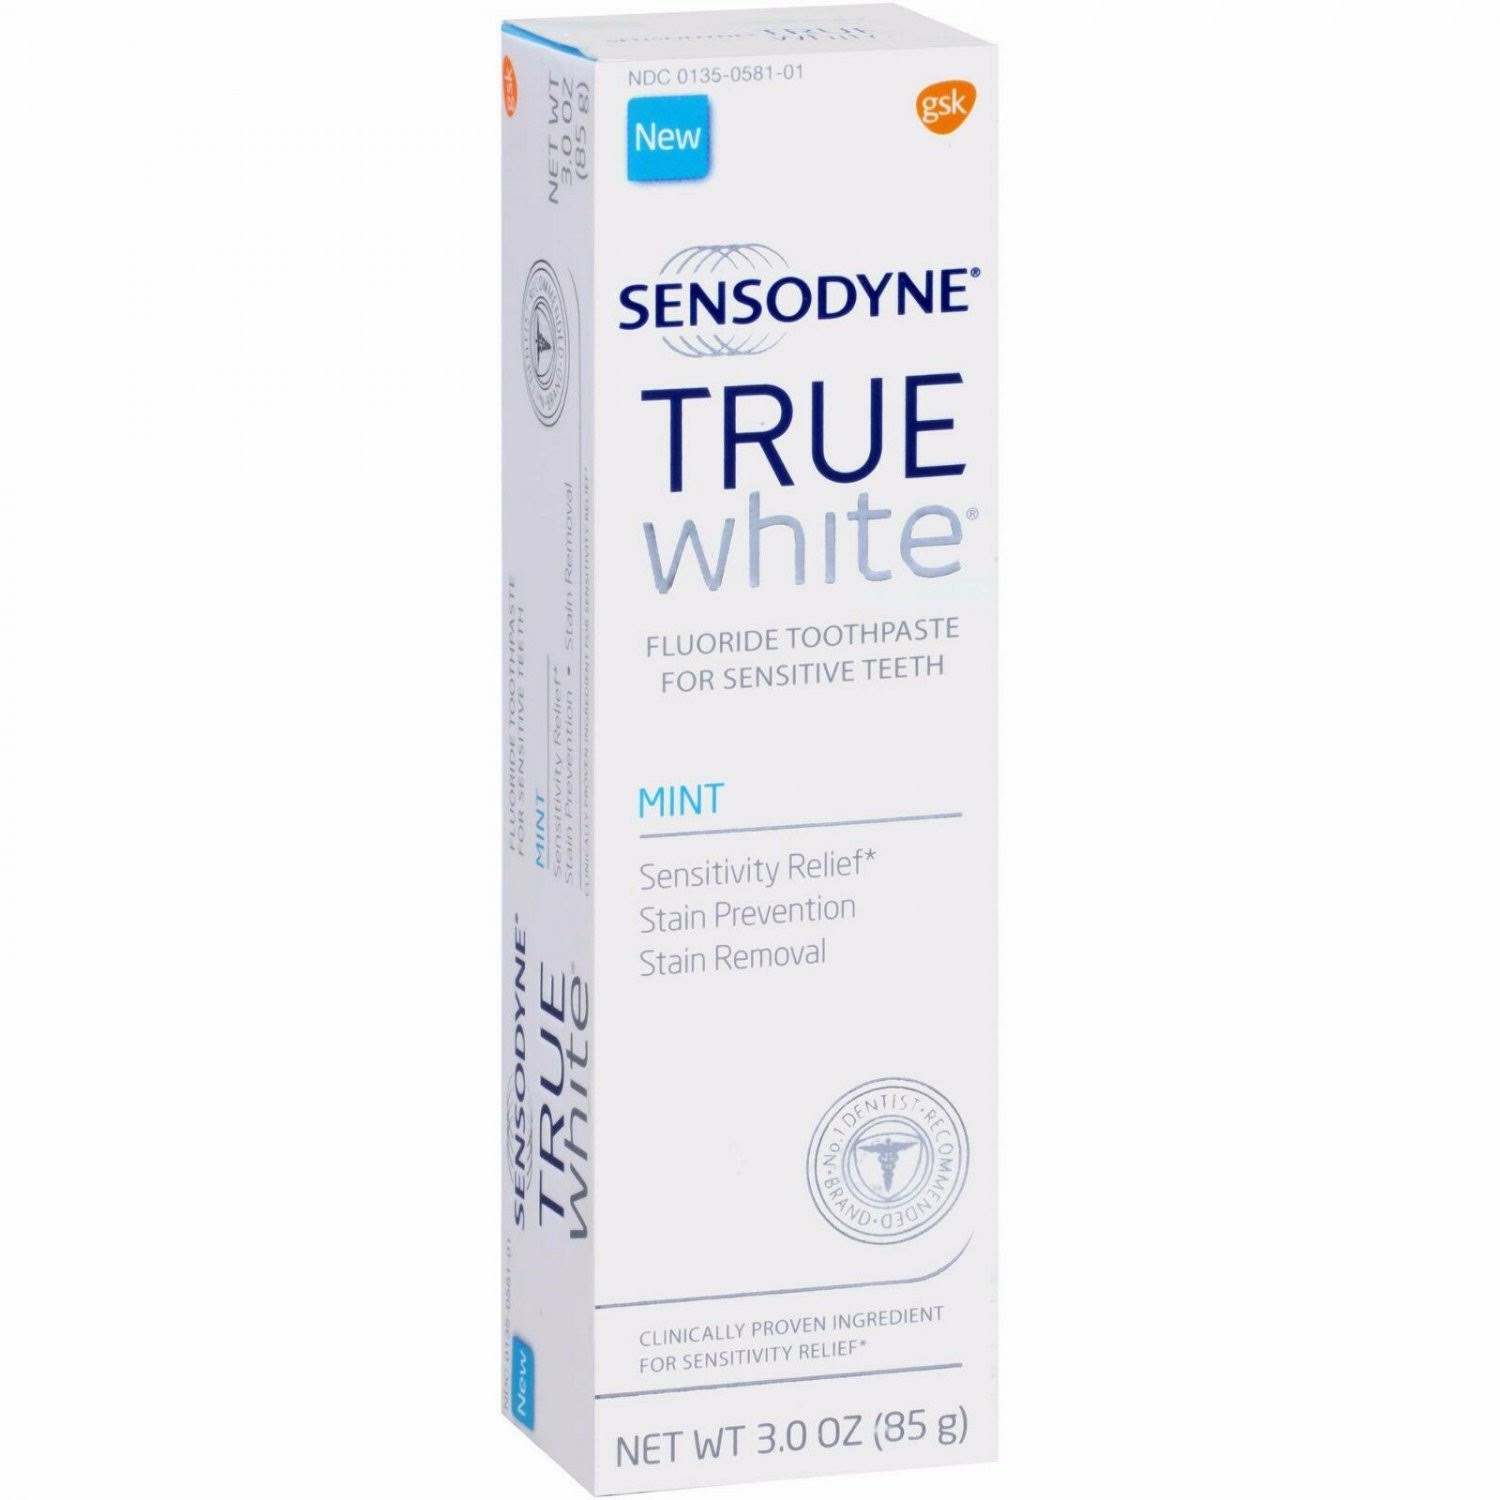 Sensodyne True White Toothpaste - Mint, 85g